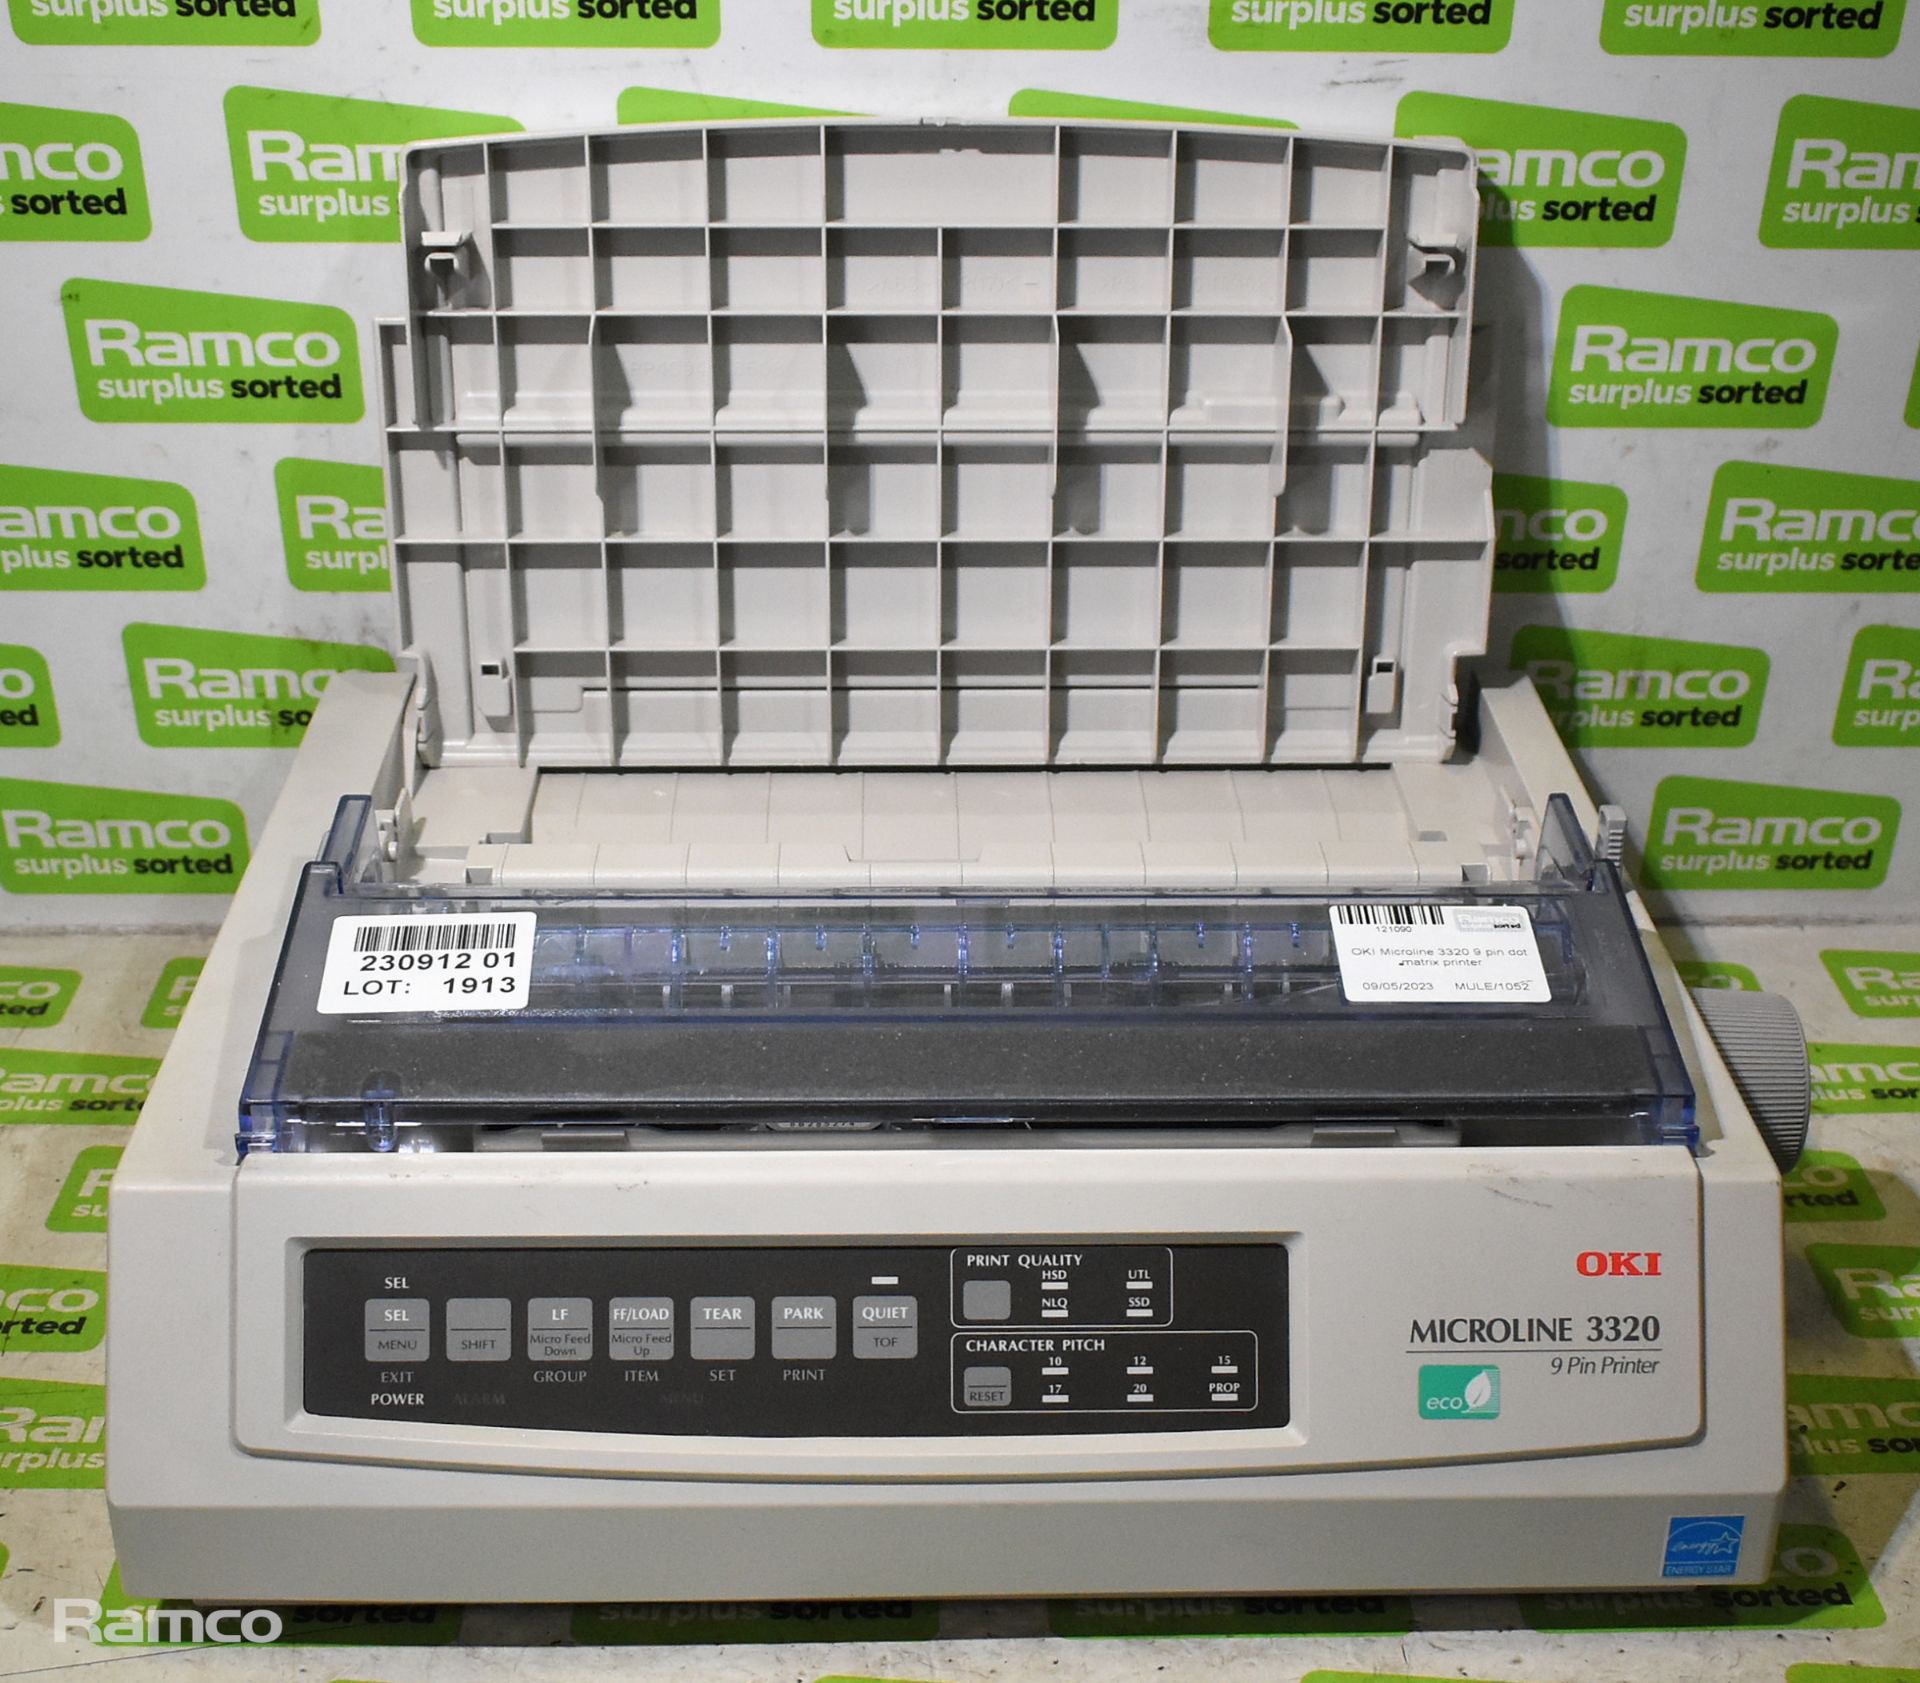 OKI Microline 3320 9 pin dot matrix printer